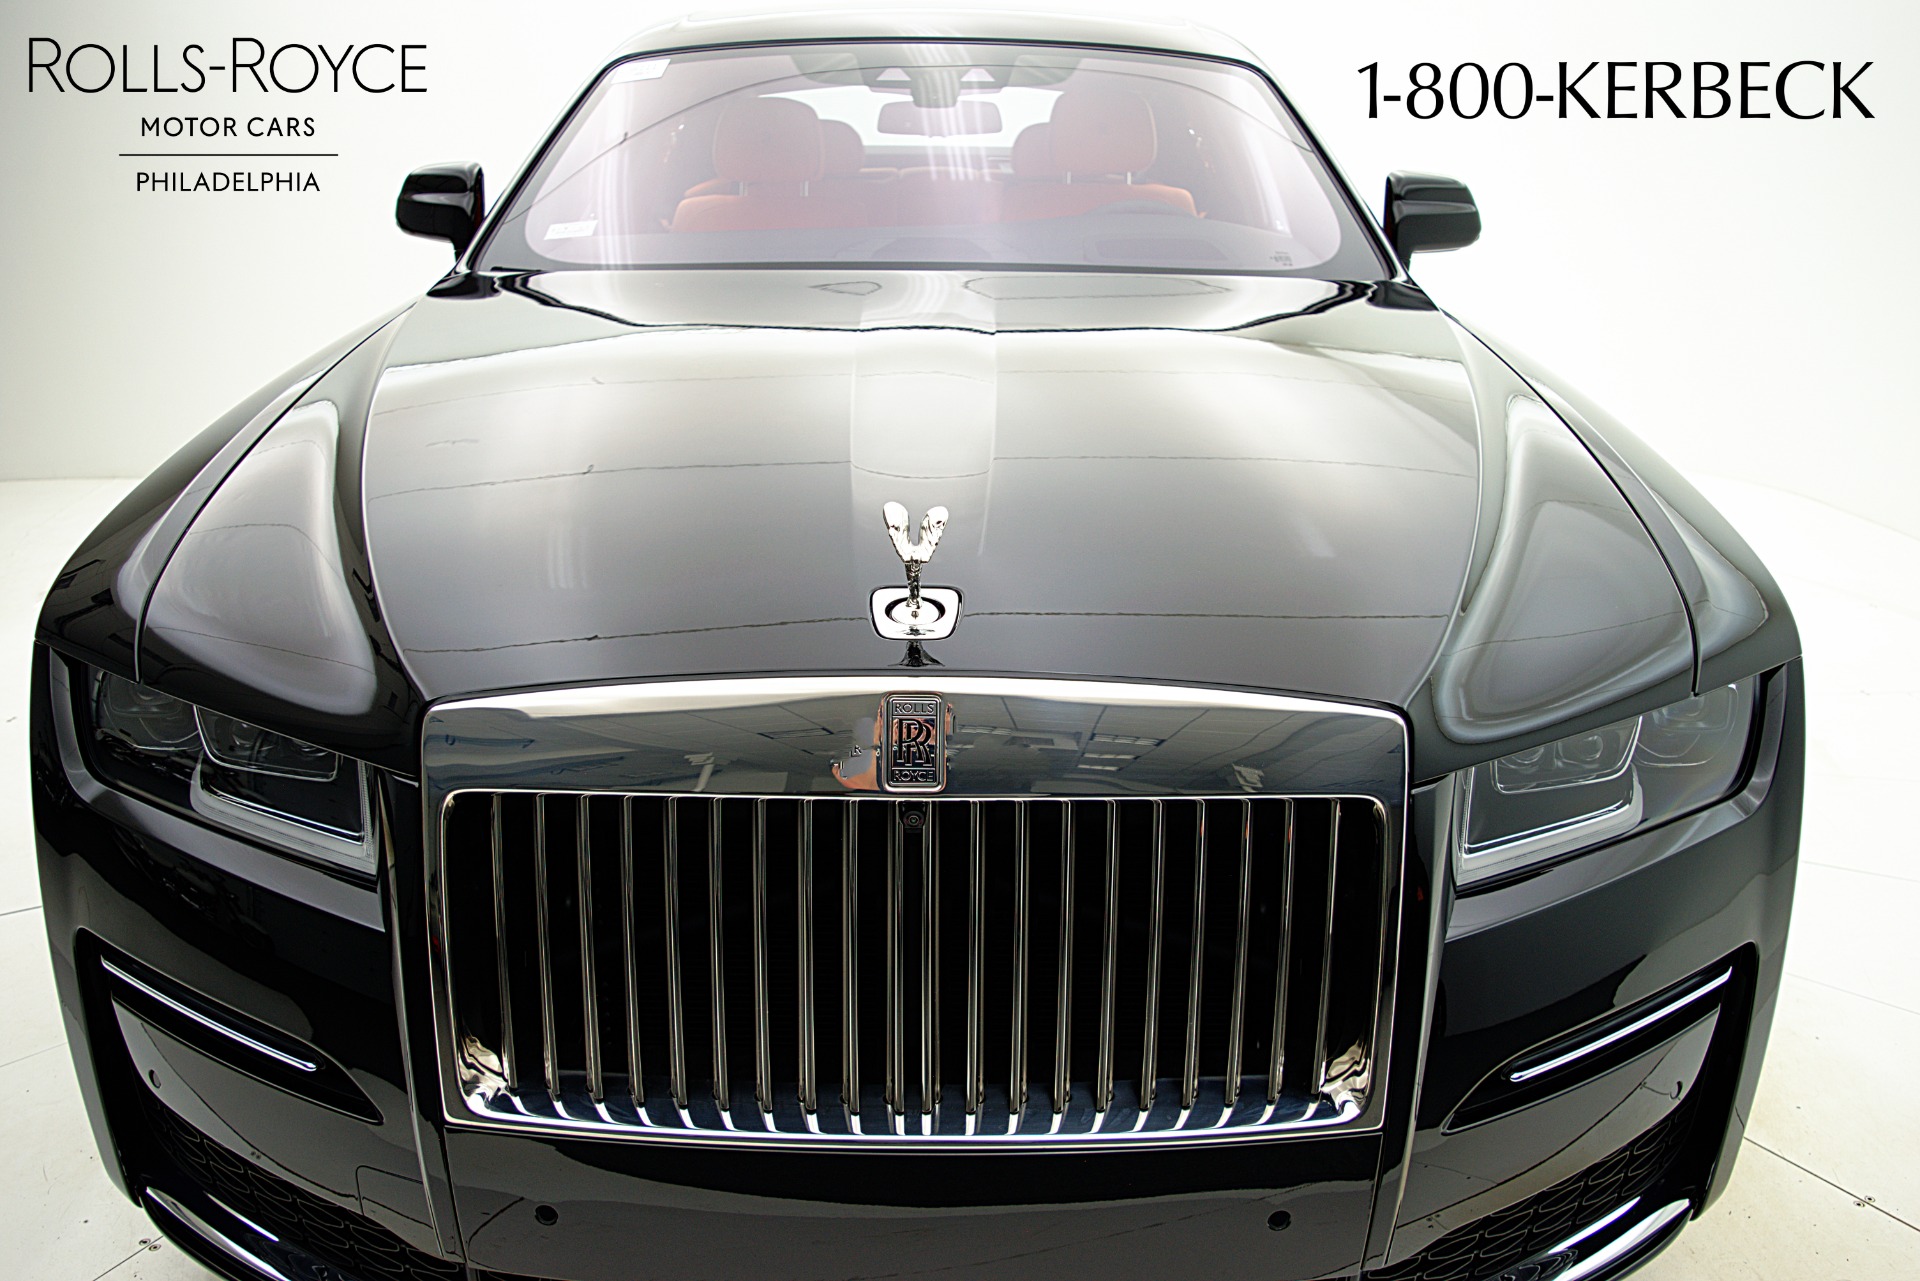 New 2023 Rolls-Royce Ghost For Sale ($379,825)  Rolls-Royce Motor Cars  Philadelphia Stock #23R111